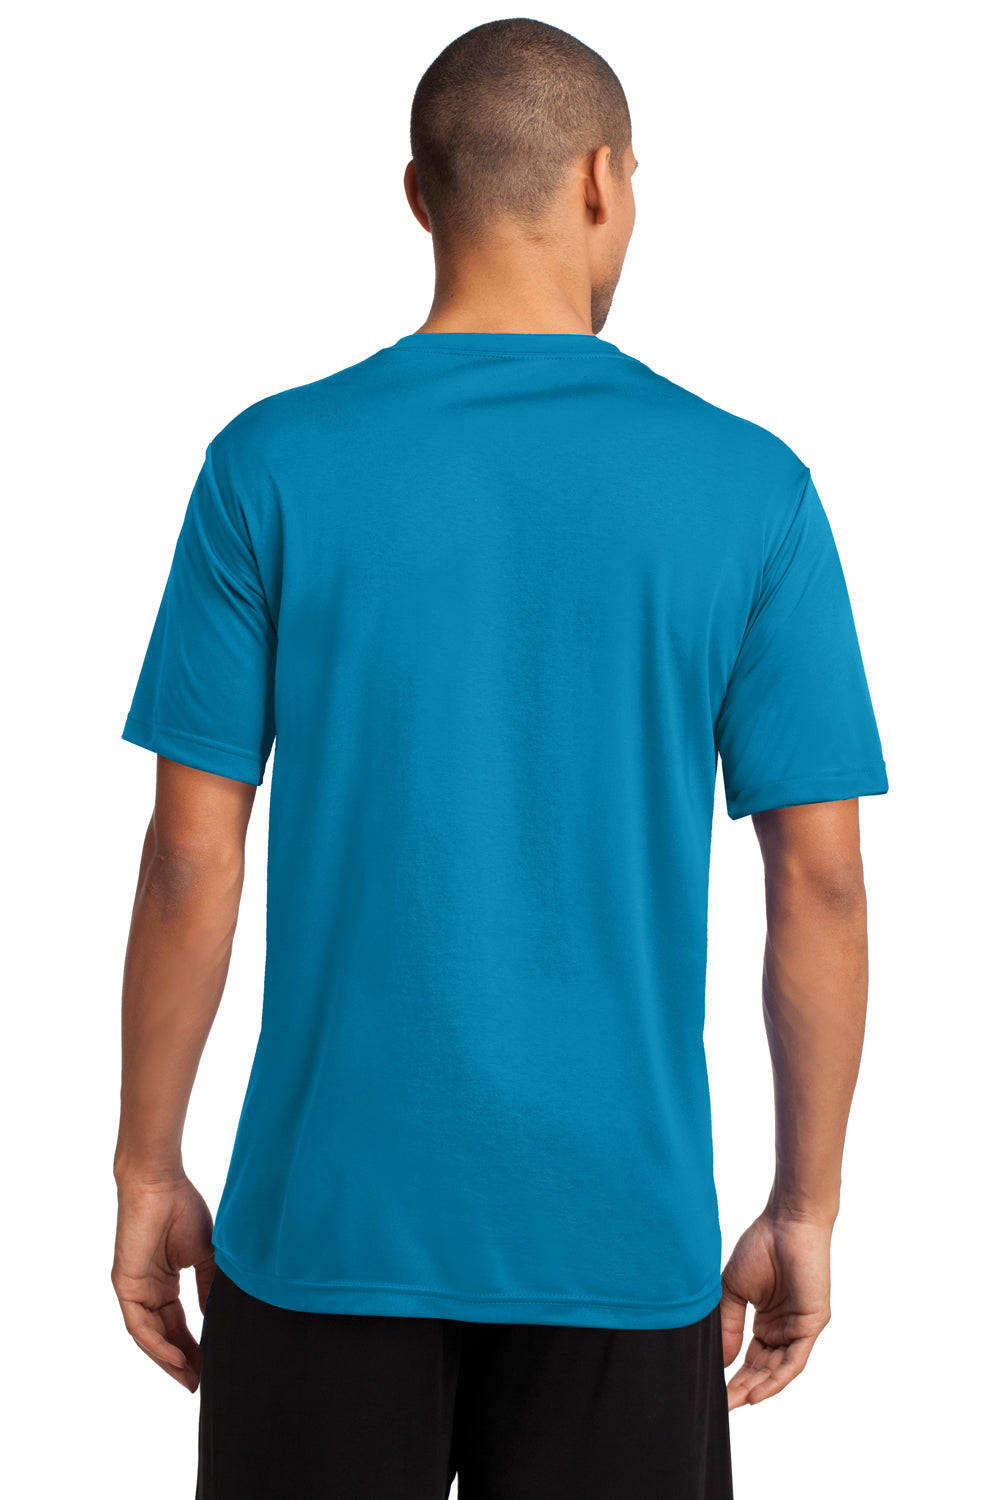 Port & Company PC380 Mens Dry Zone Performance Moisture Wicking Short Sleeve Crewneck T-Shirt Neon Blue Back